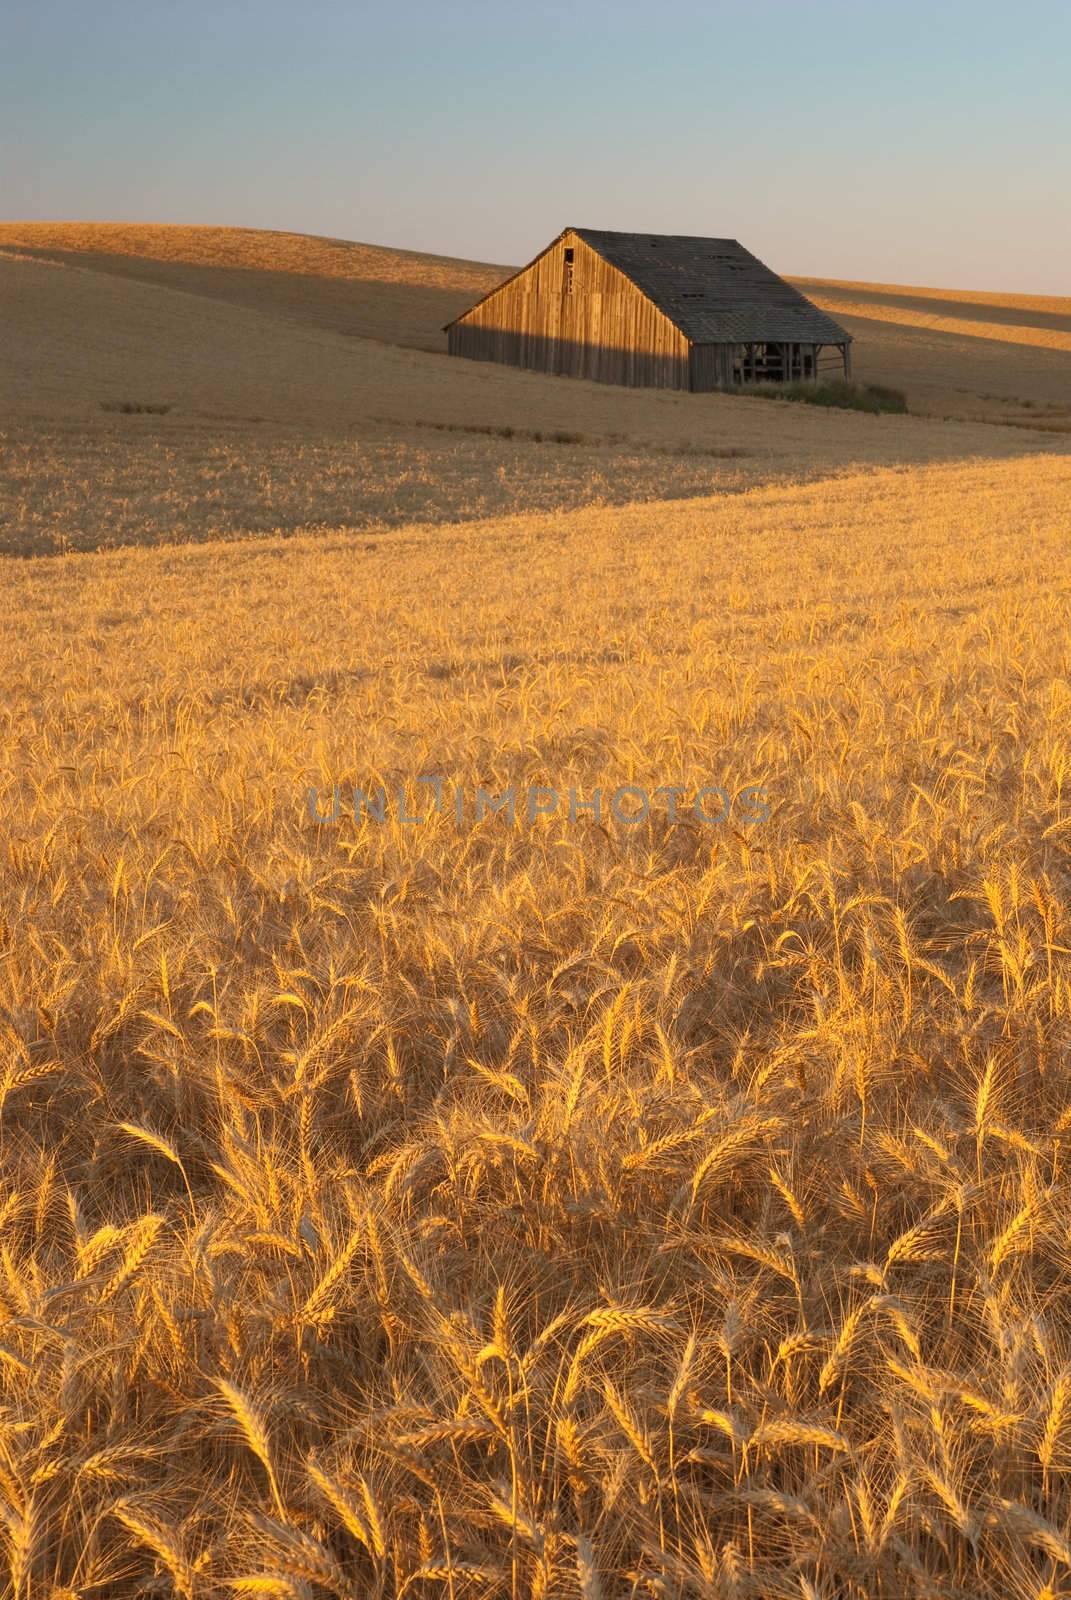 Old barn and wheat field at sunset, Whitman County, Washington, USA by CharlesBolin